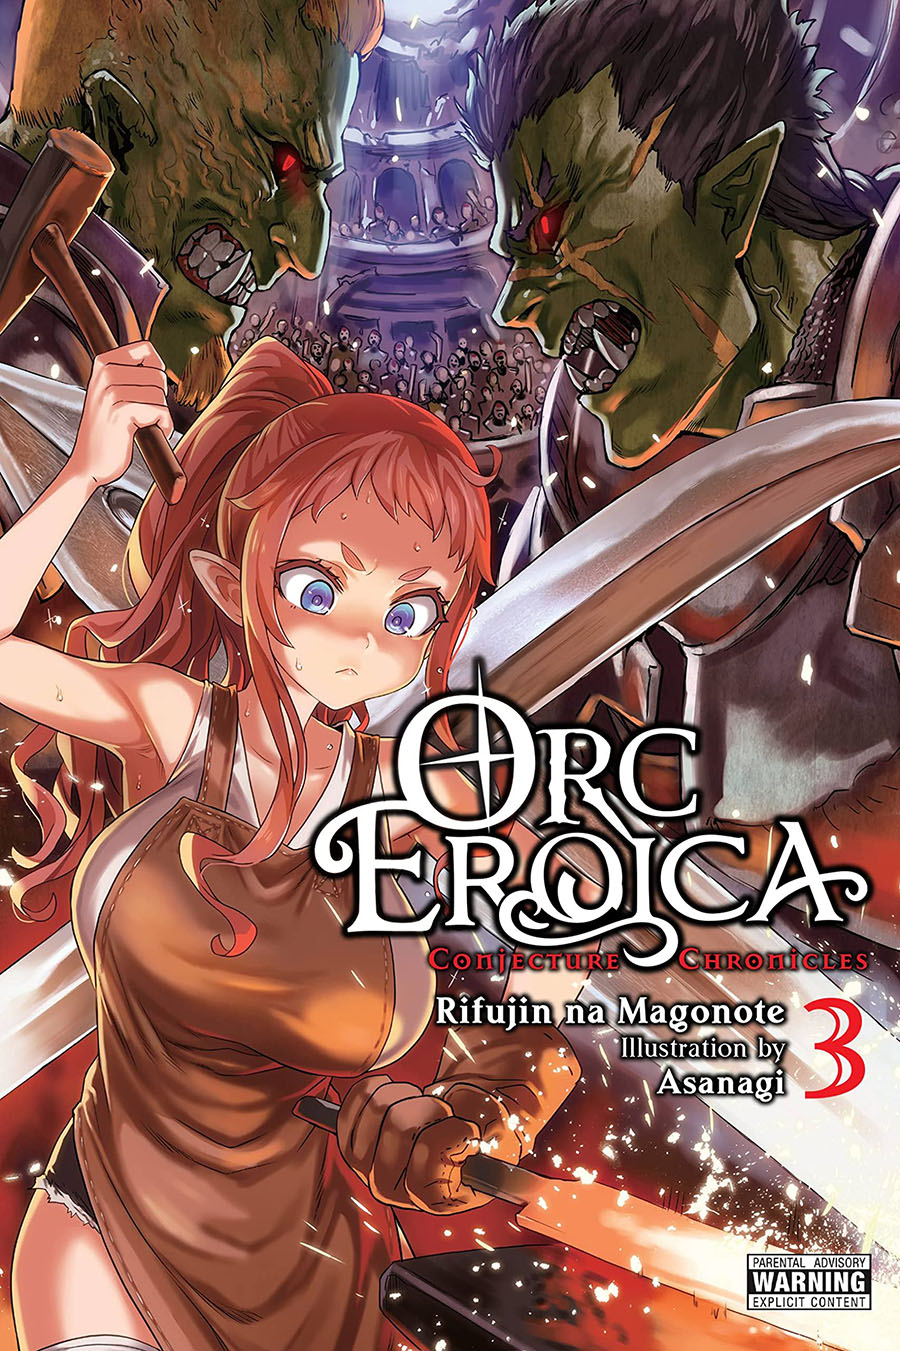 Orc Eroica Conjecture Chronicles Light Novel Vol 3